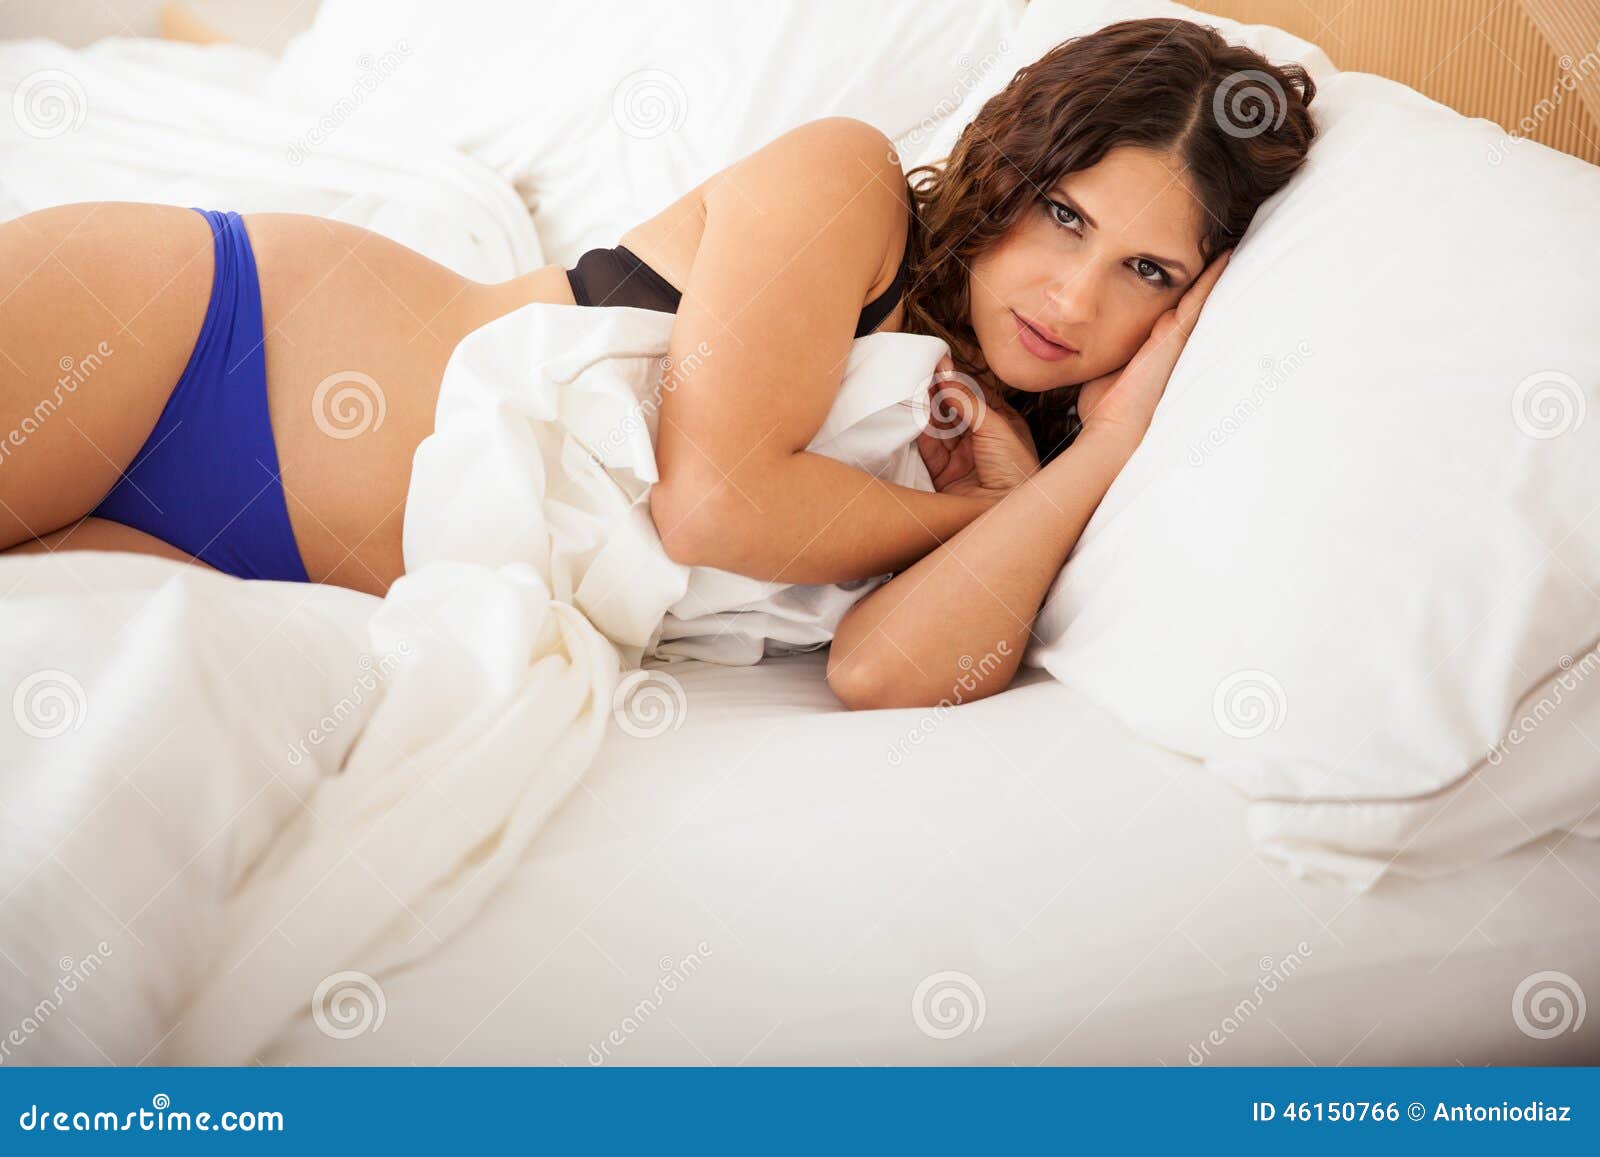 sexy teen girl sleeping porn scene picture